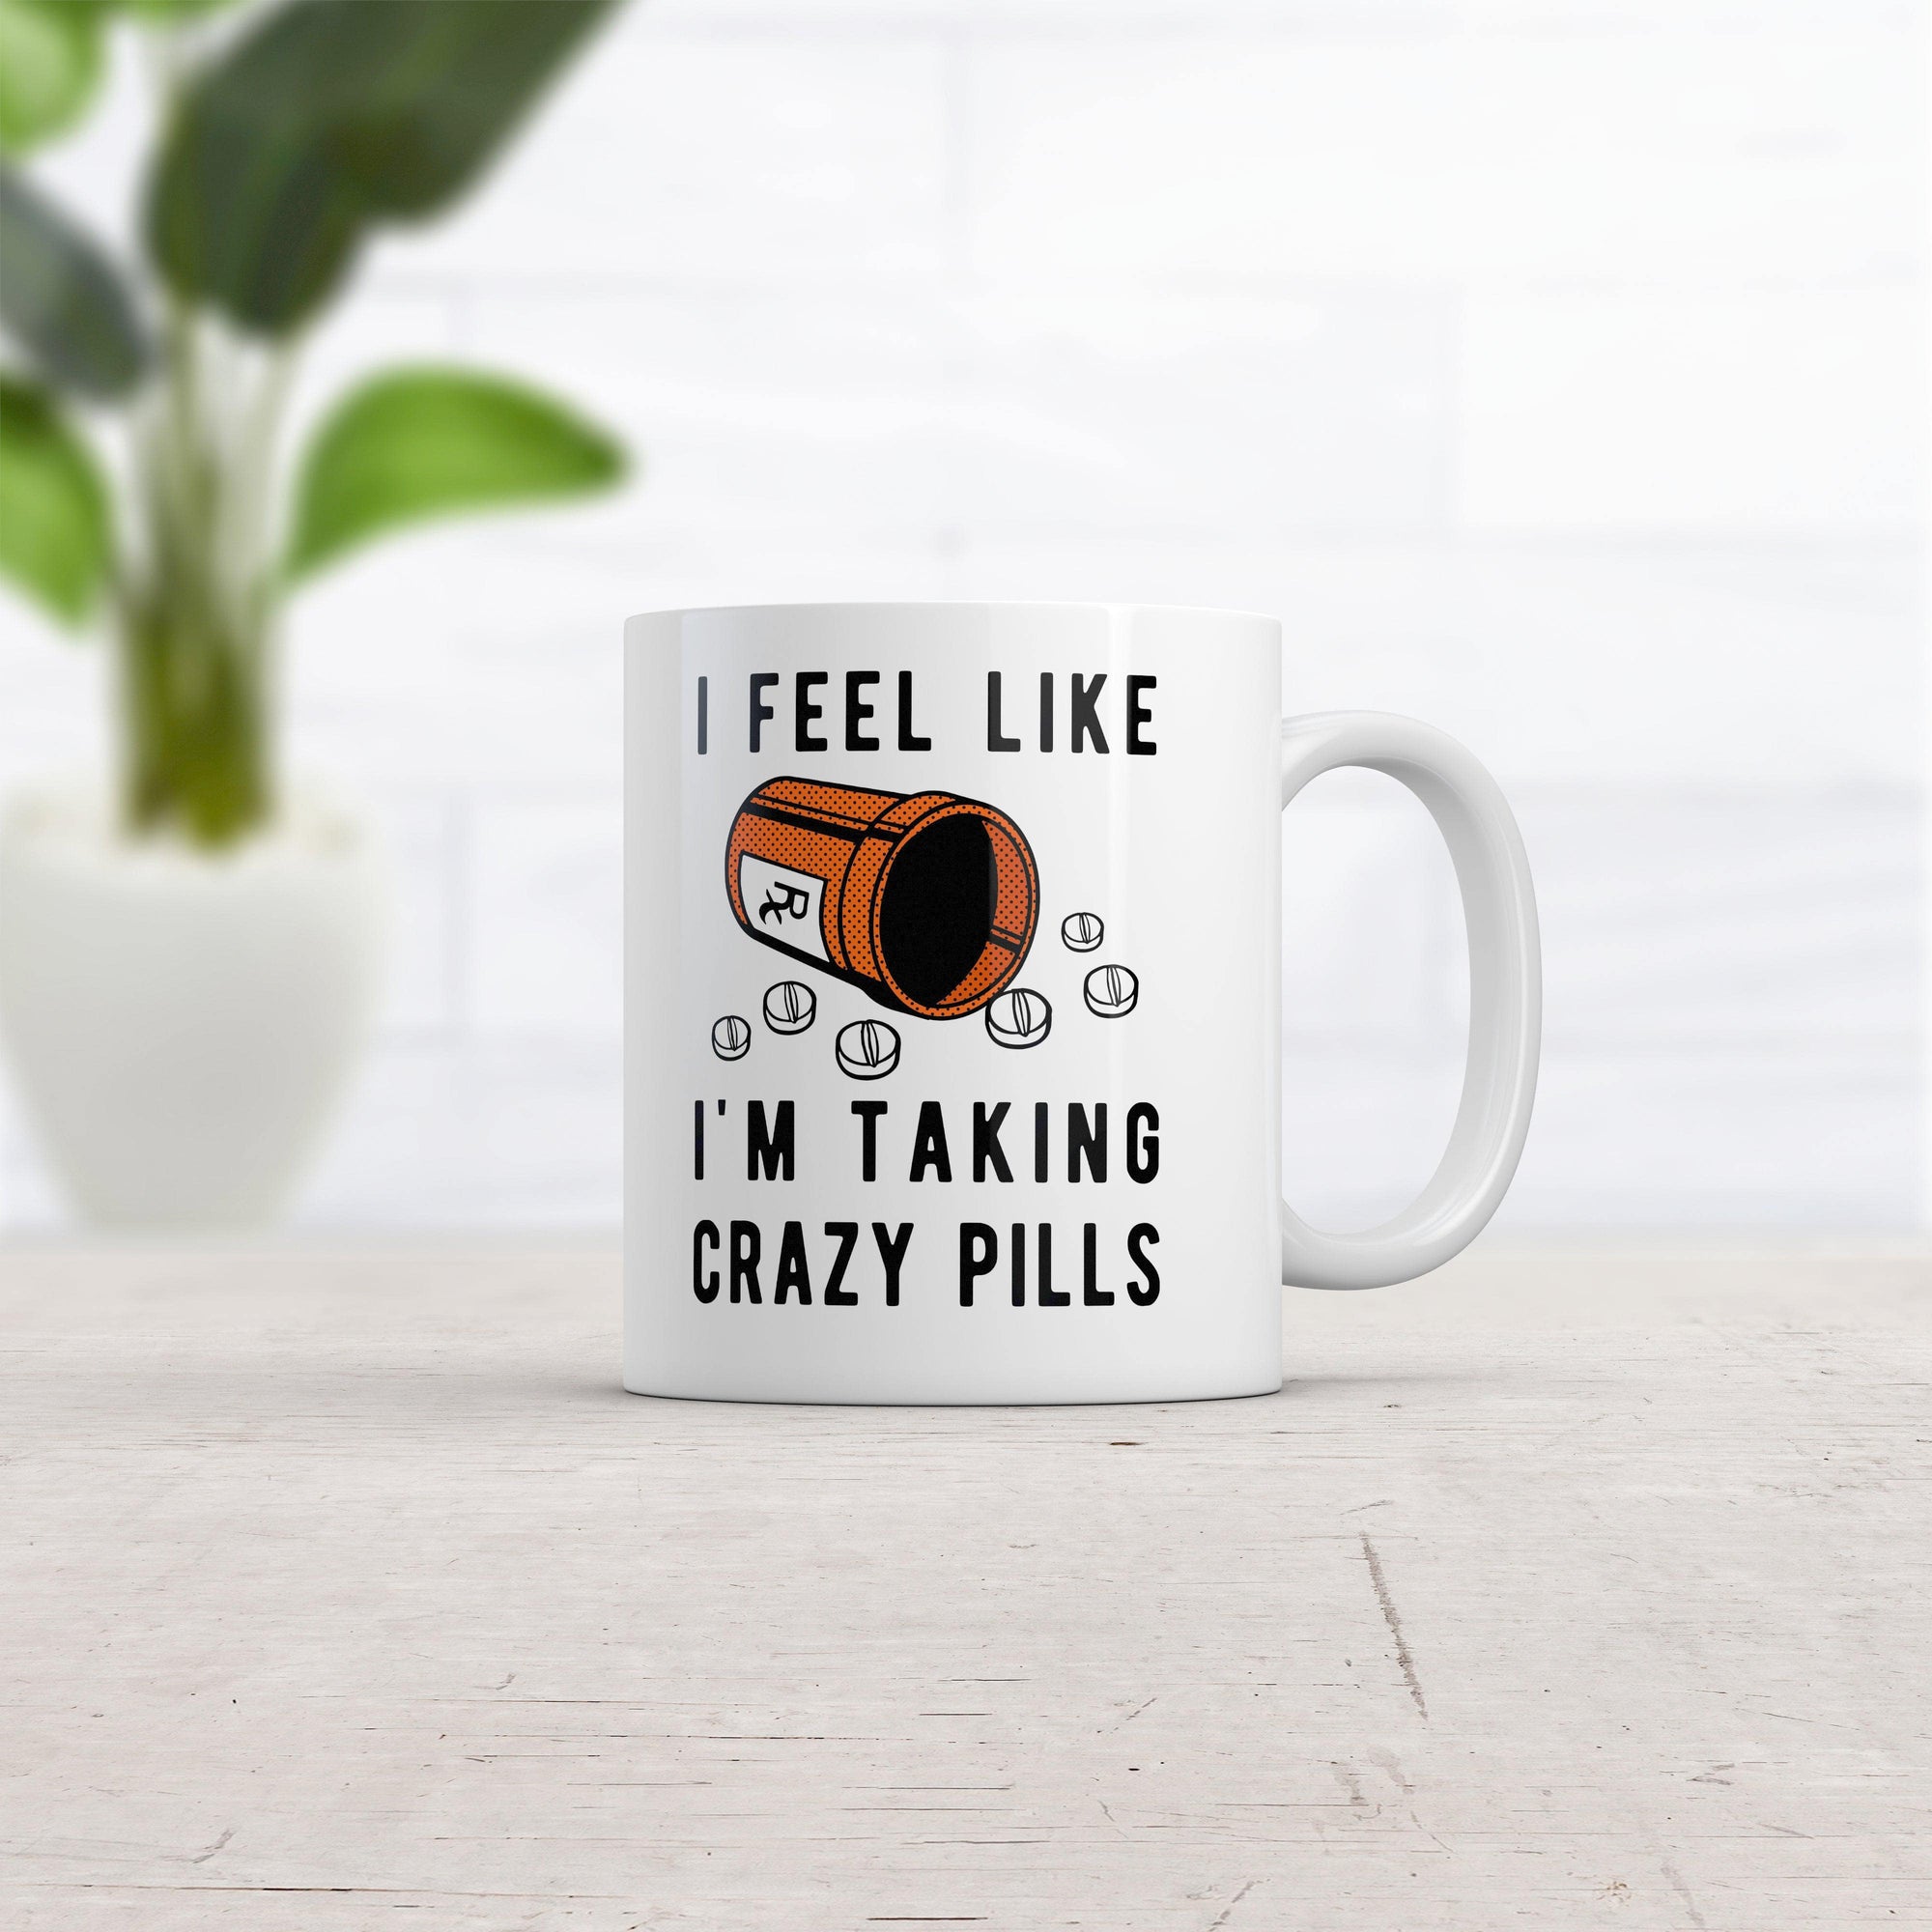 I Feel Like Im Taking Crazy Pills Mug Funny Sarcastic Meds Joke Graphic Novelty Coffee Cup-11oz  -  Crazy Dog T-Shirts